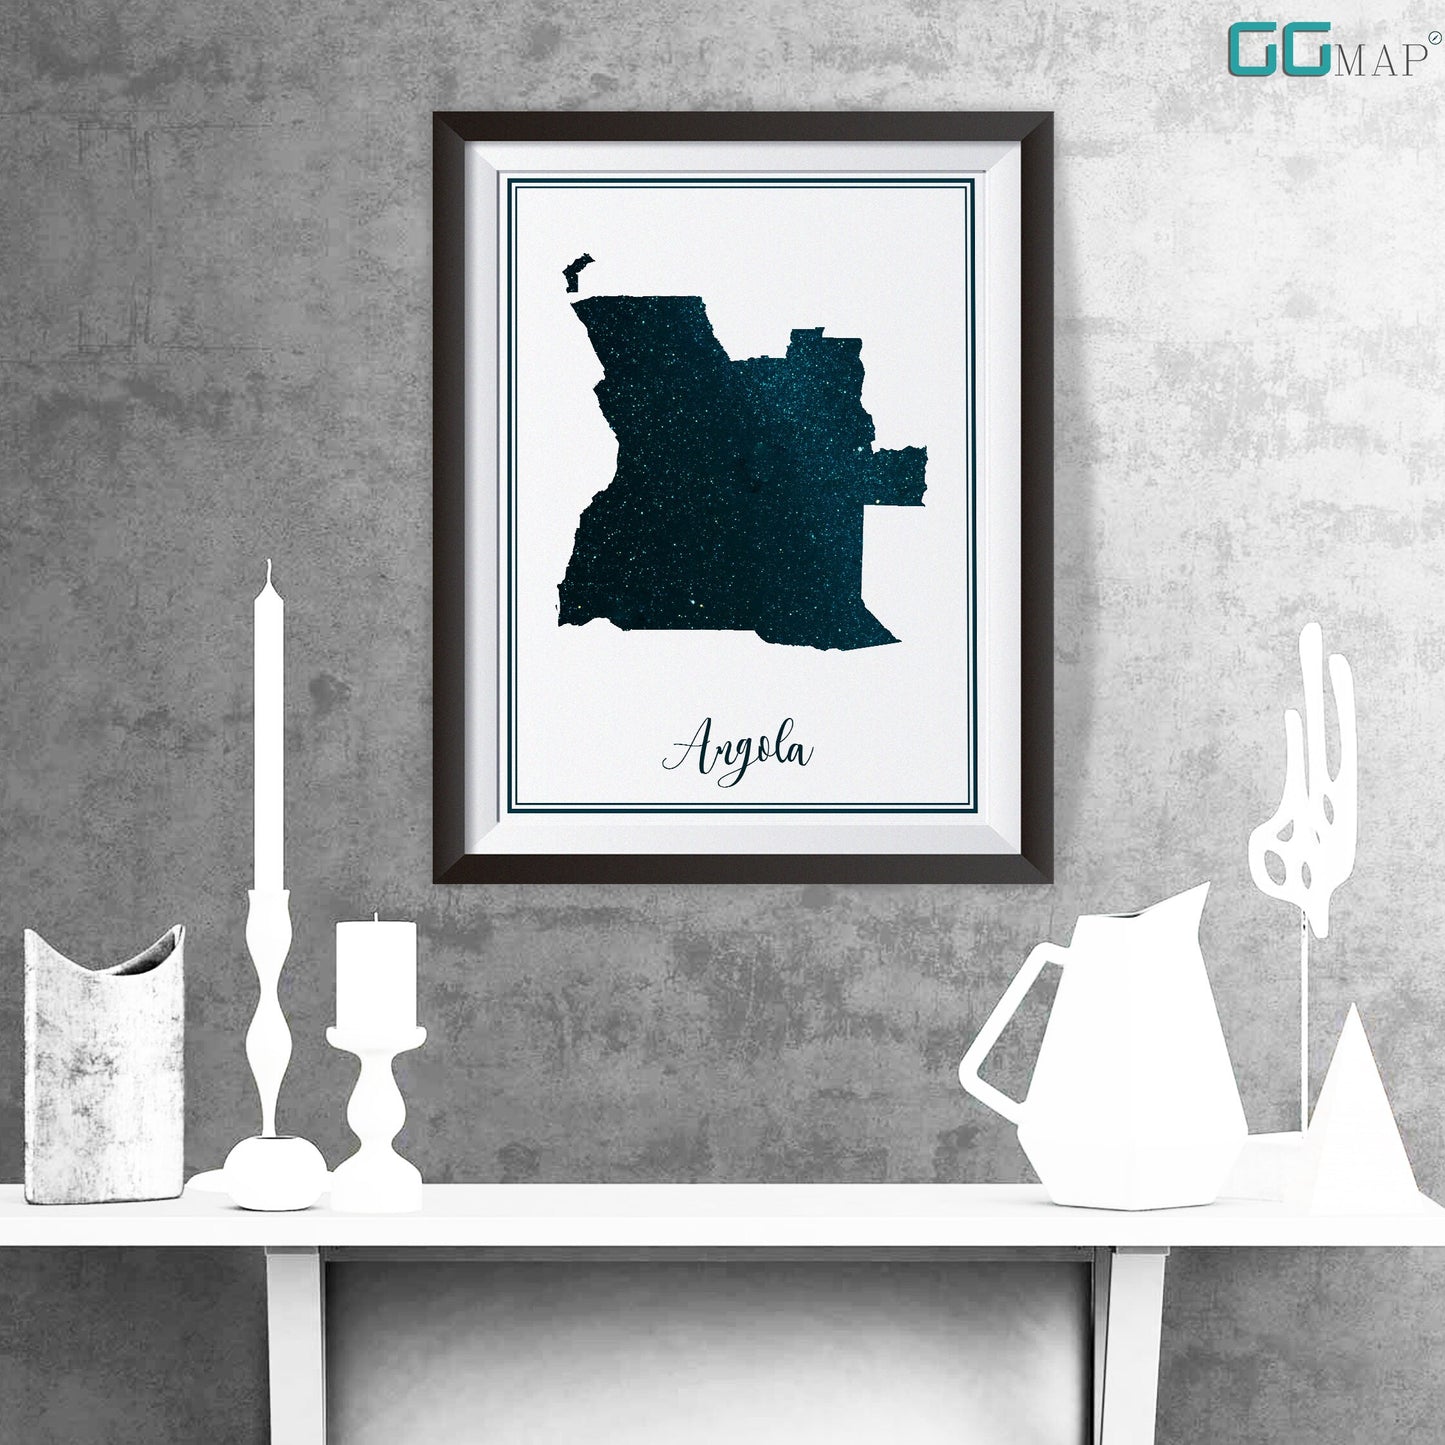 ANGOLA map - Angola stars map - Travel poster - Home Decor - Wall decor - Office map - Angola gift - GeoGIS studio